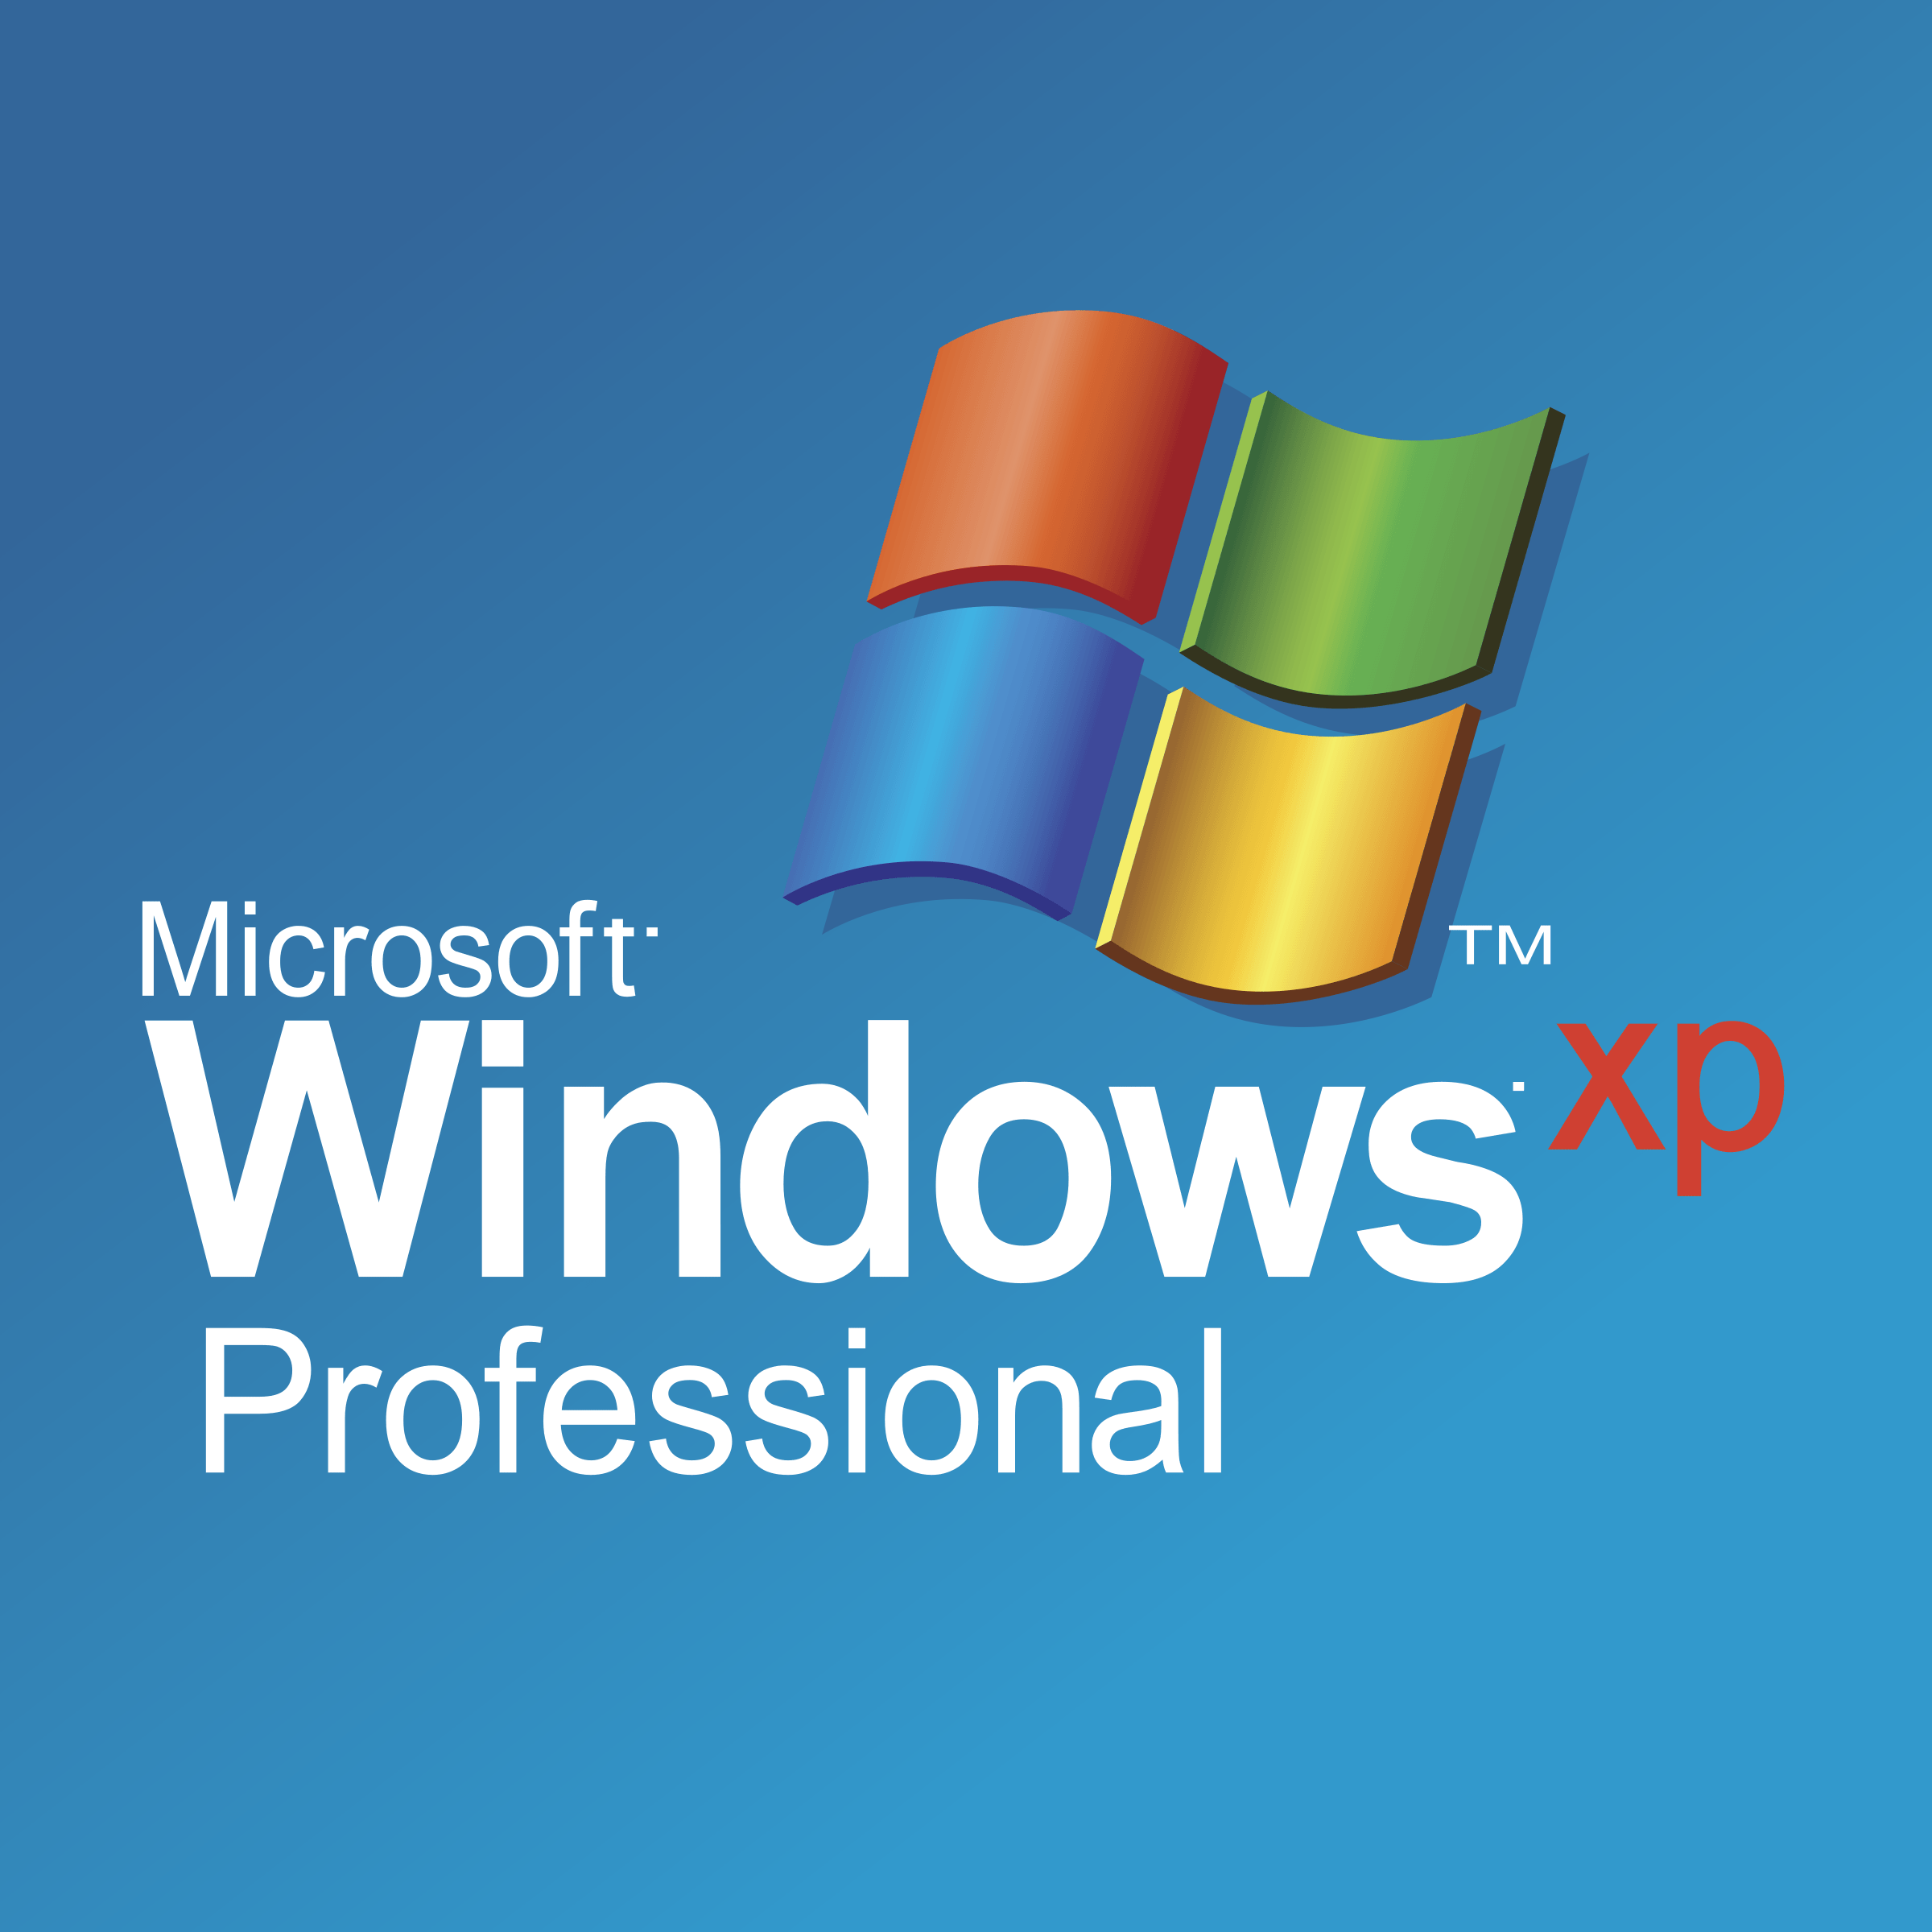 XP Logo - Microsoft Windows XP Professional Logo PNG Transparent & SVG Vector ...